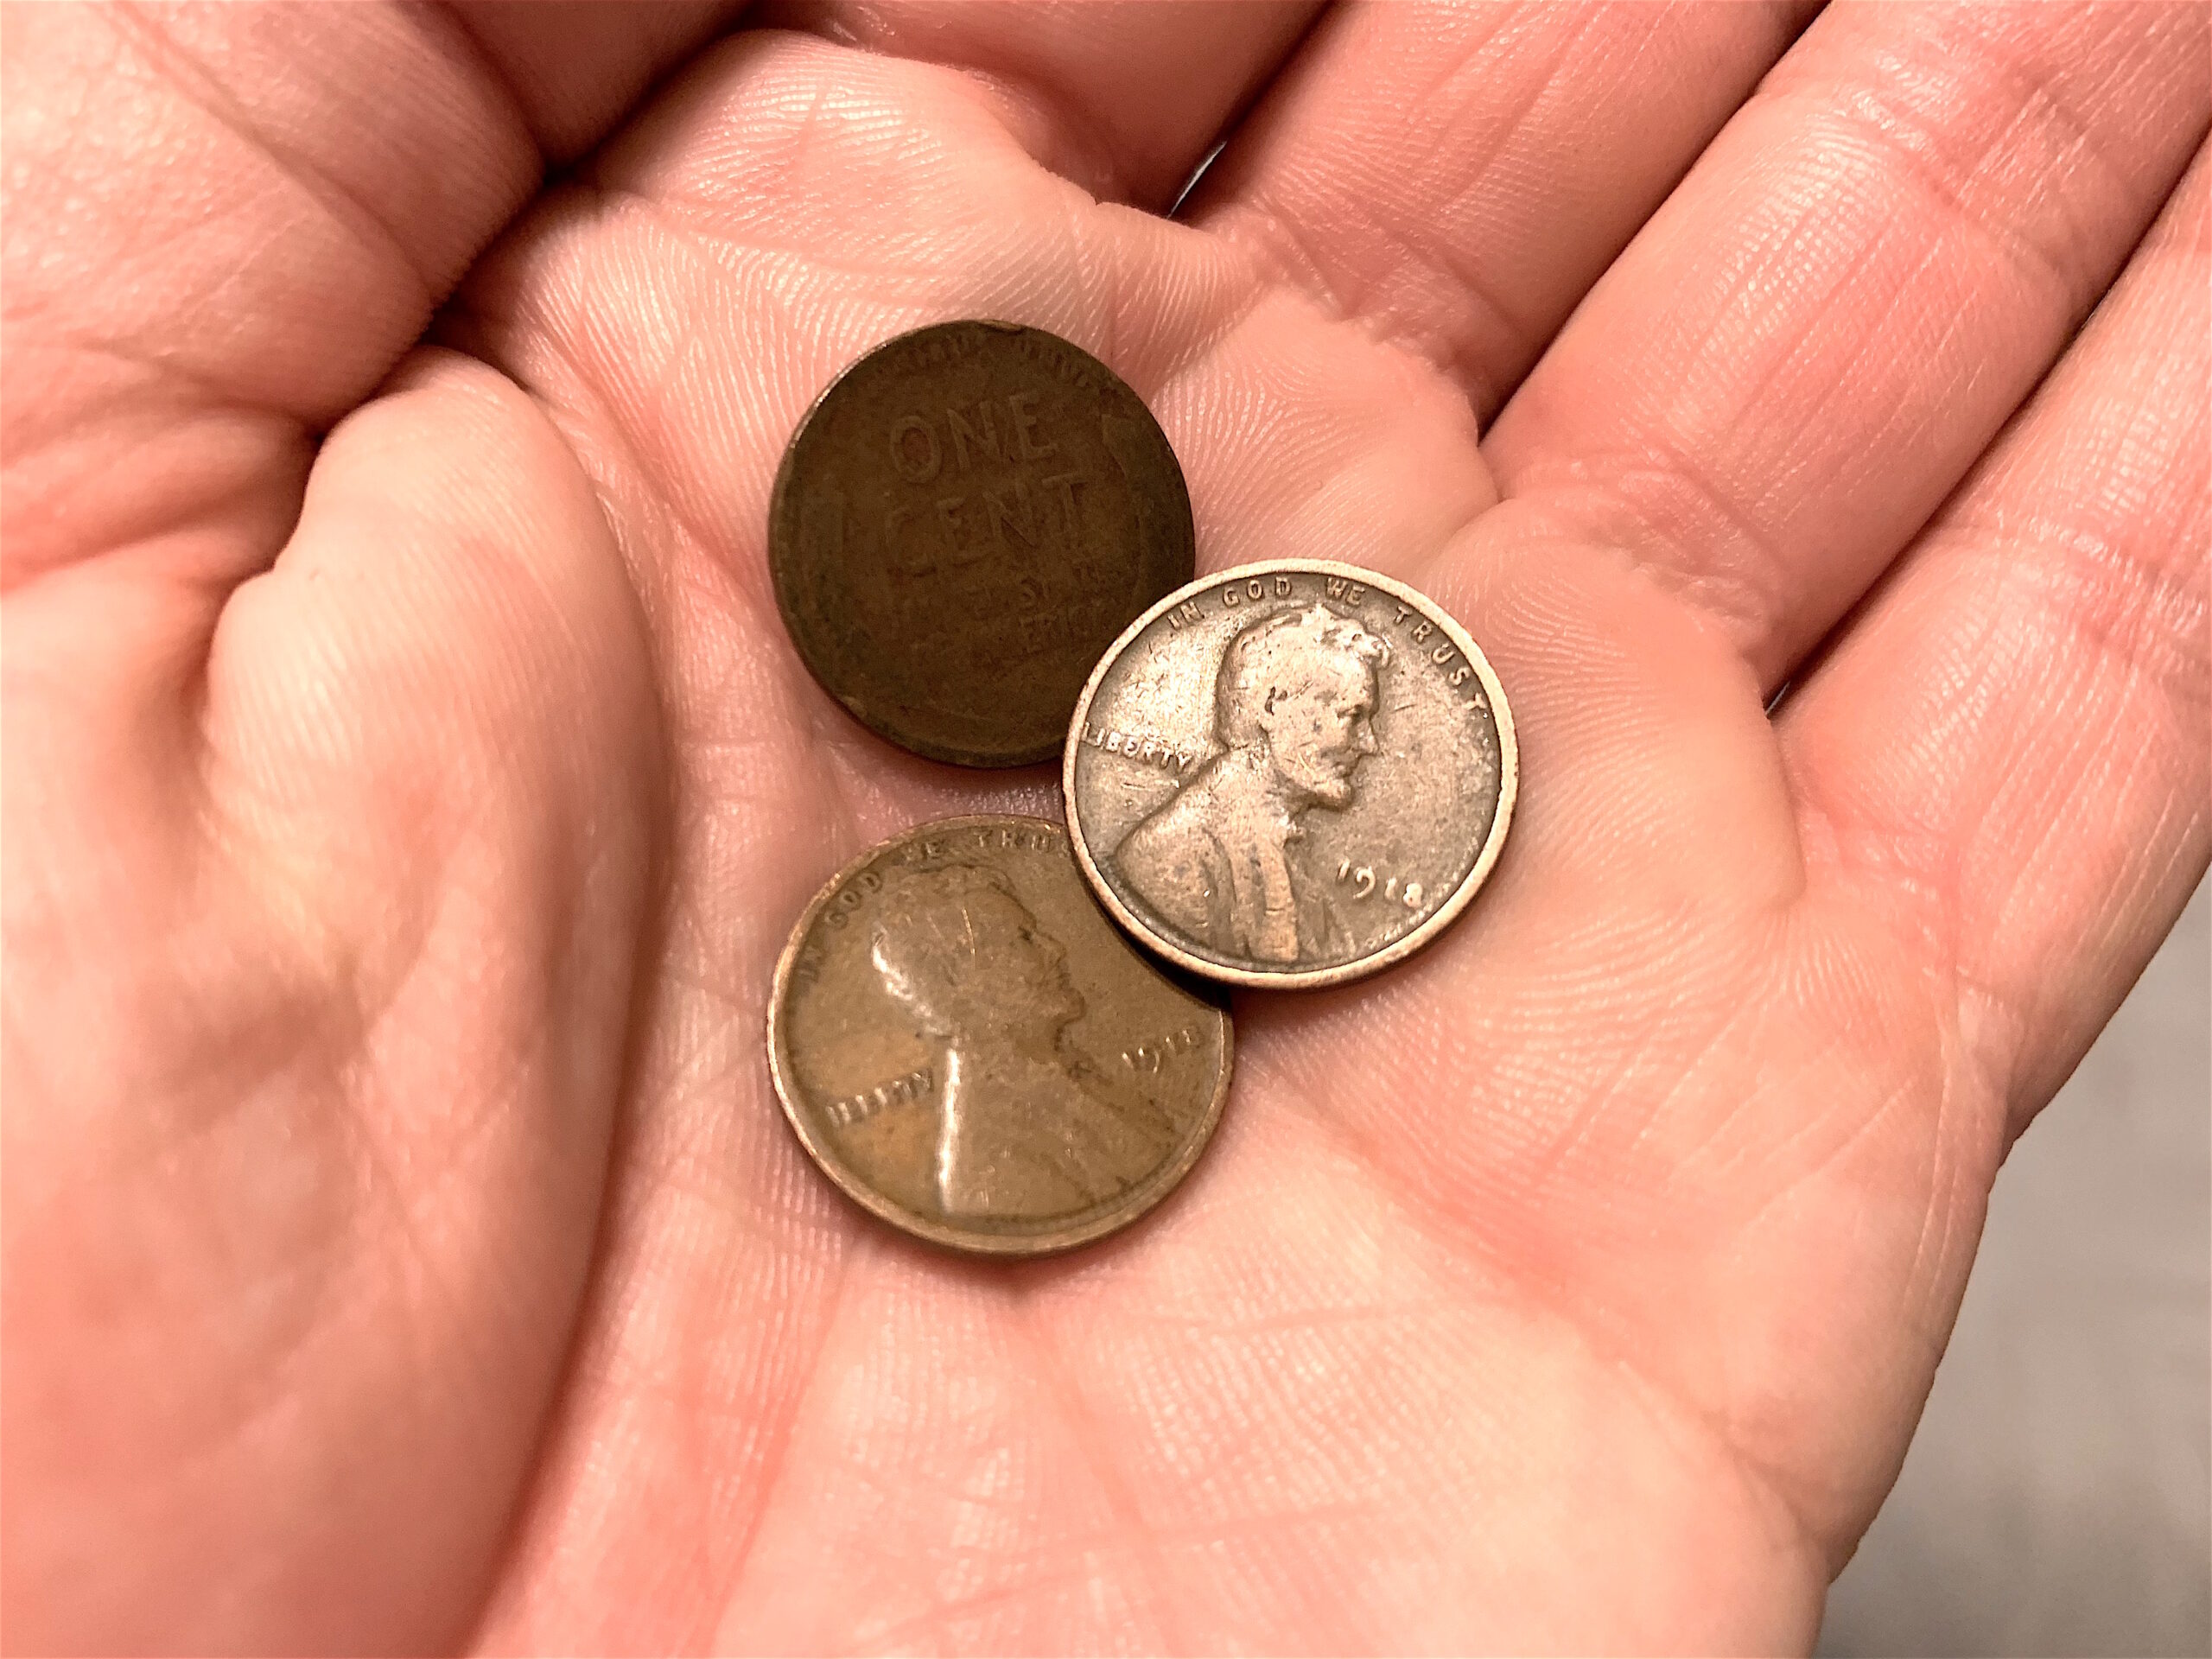 1918 Penny